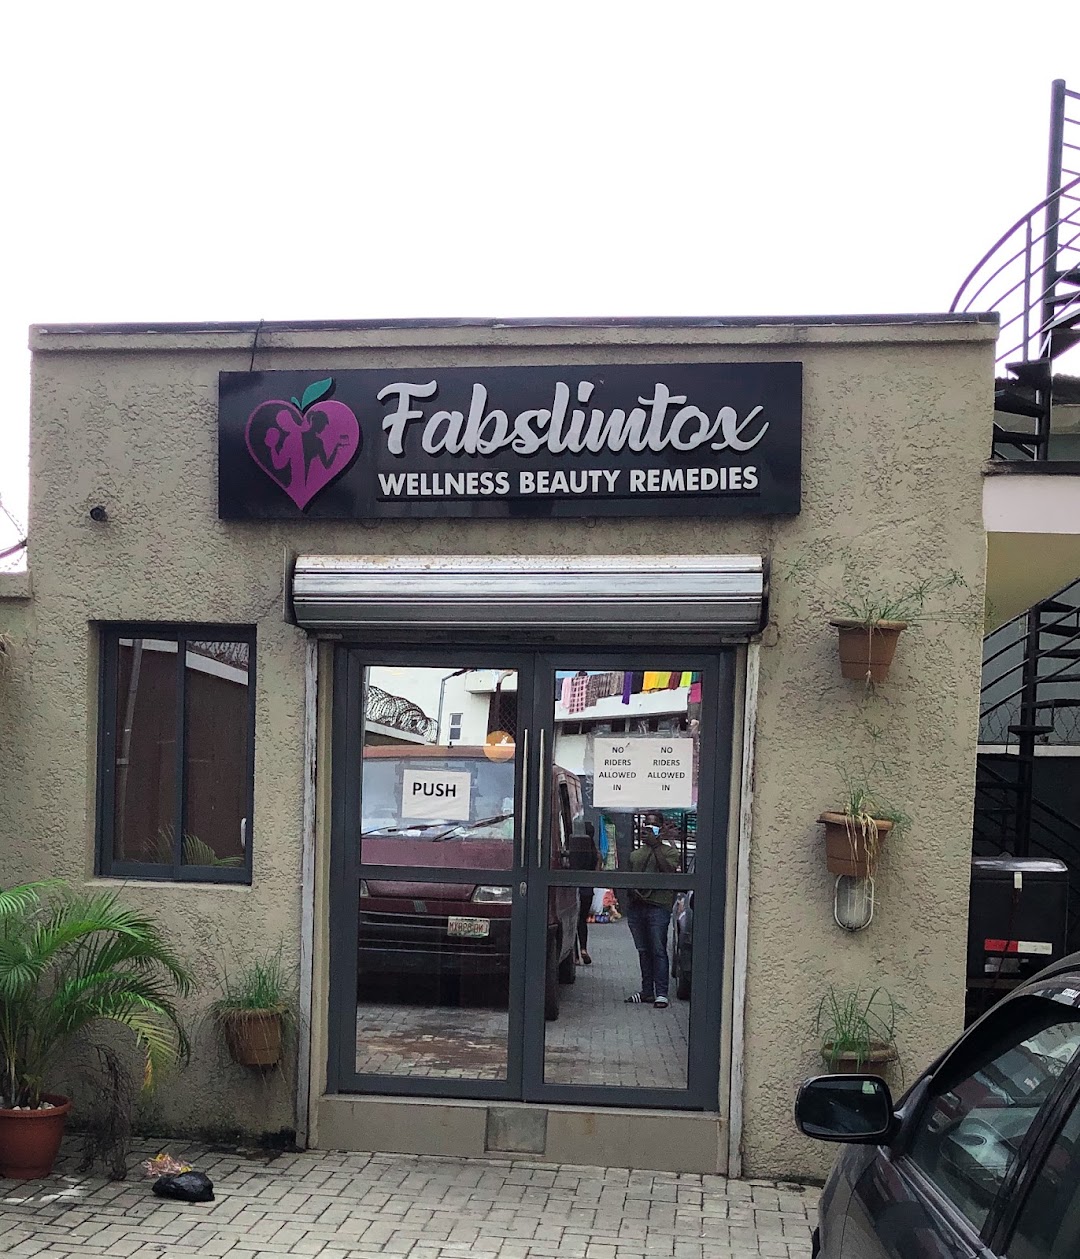 Fabslimtox Solutions